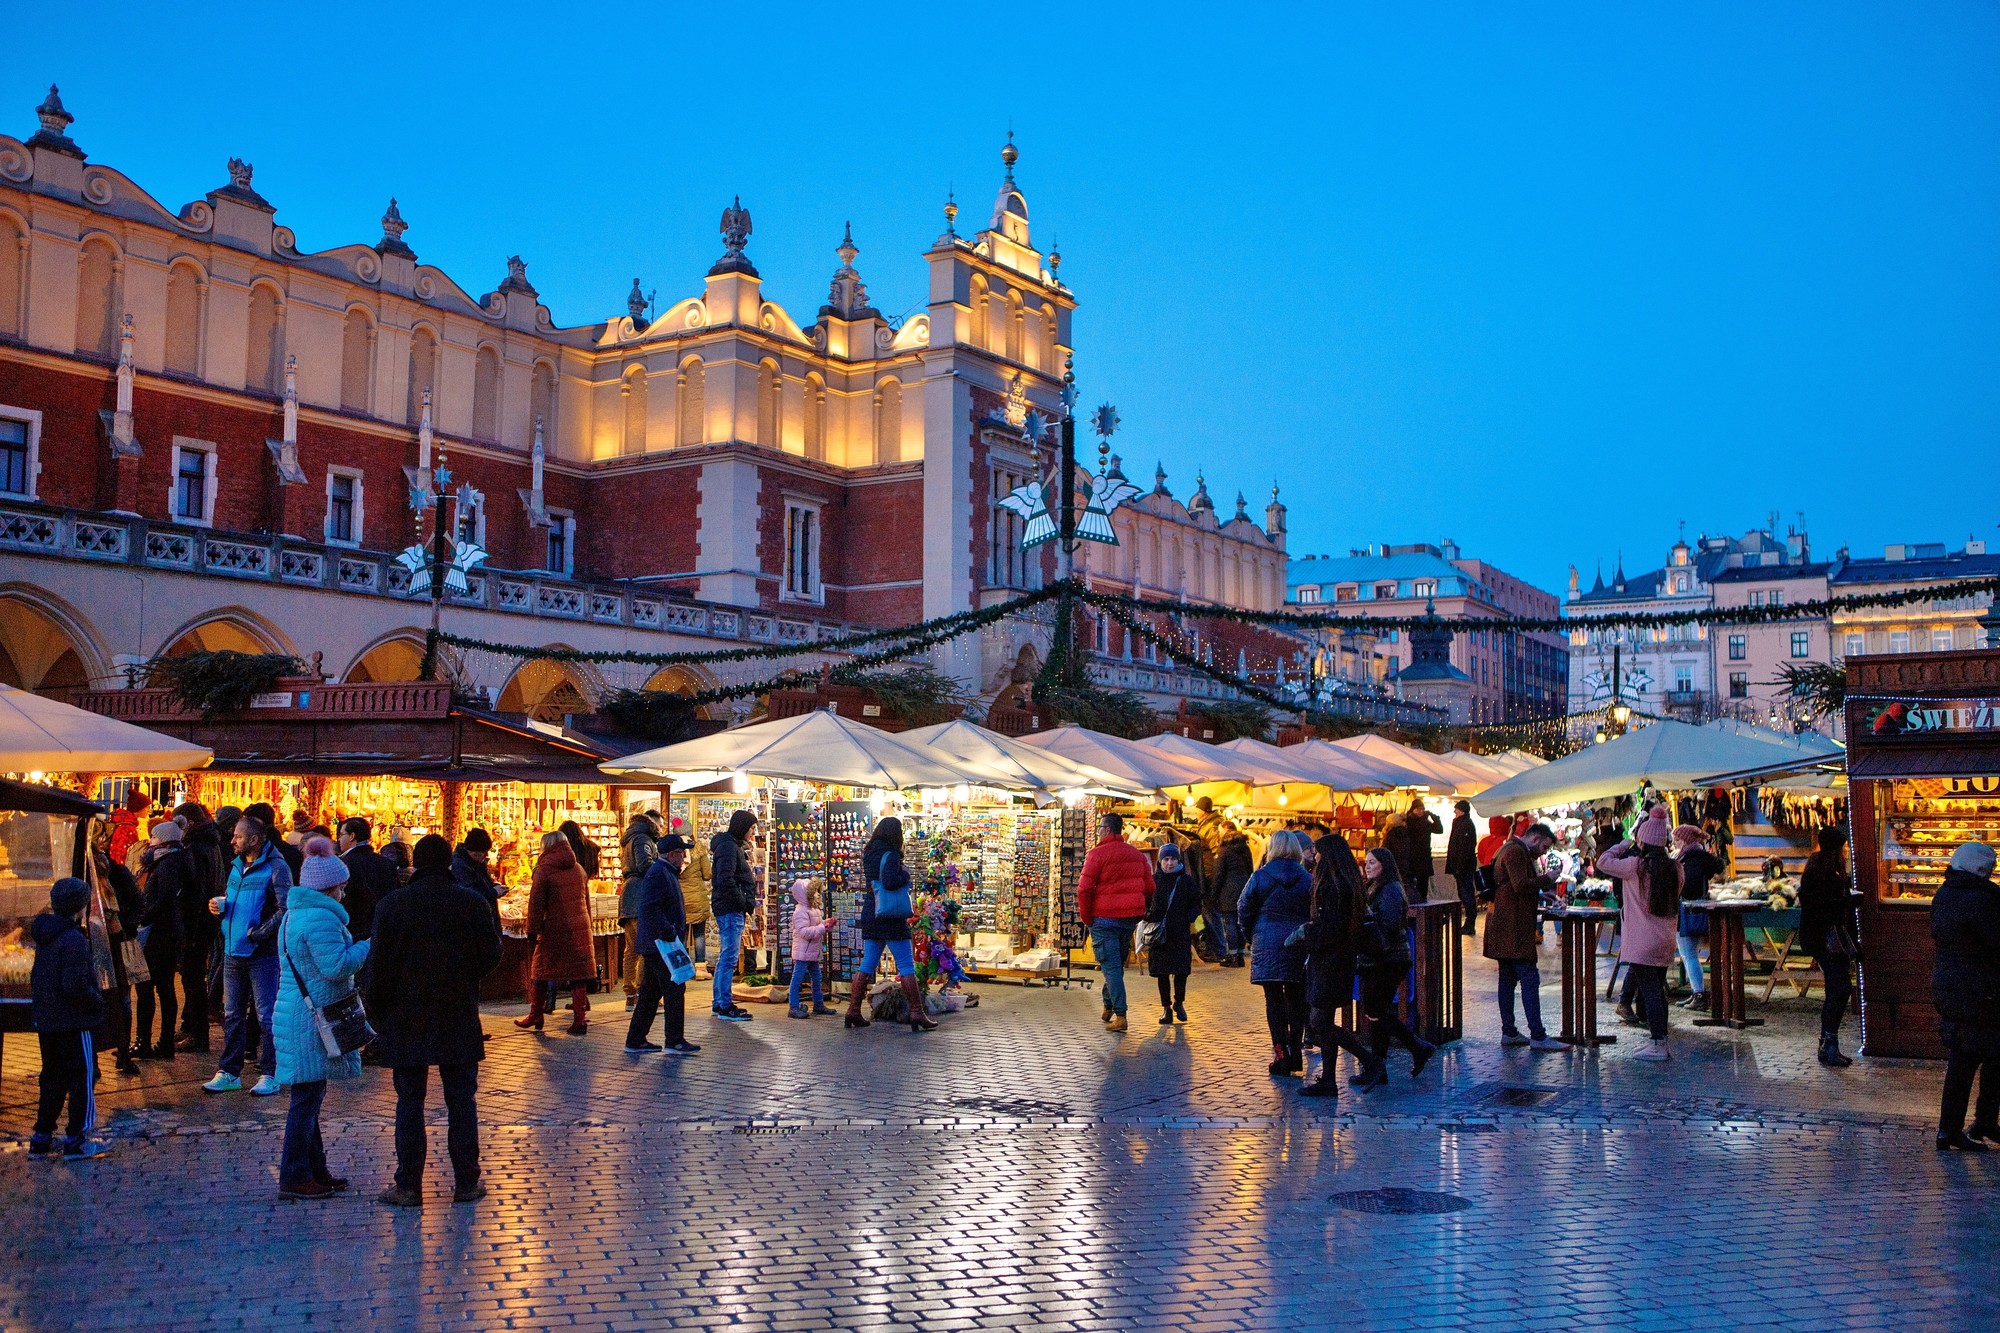 Kraków Christmas Fair on the Market Square | Annual Market Square Christmas Fair in Kraków